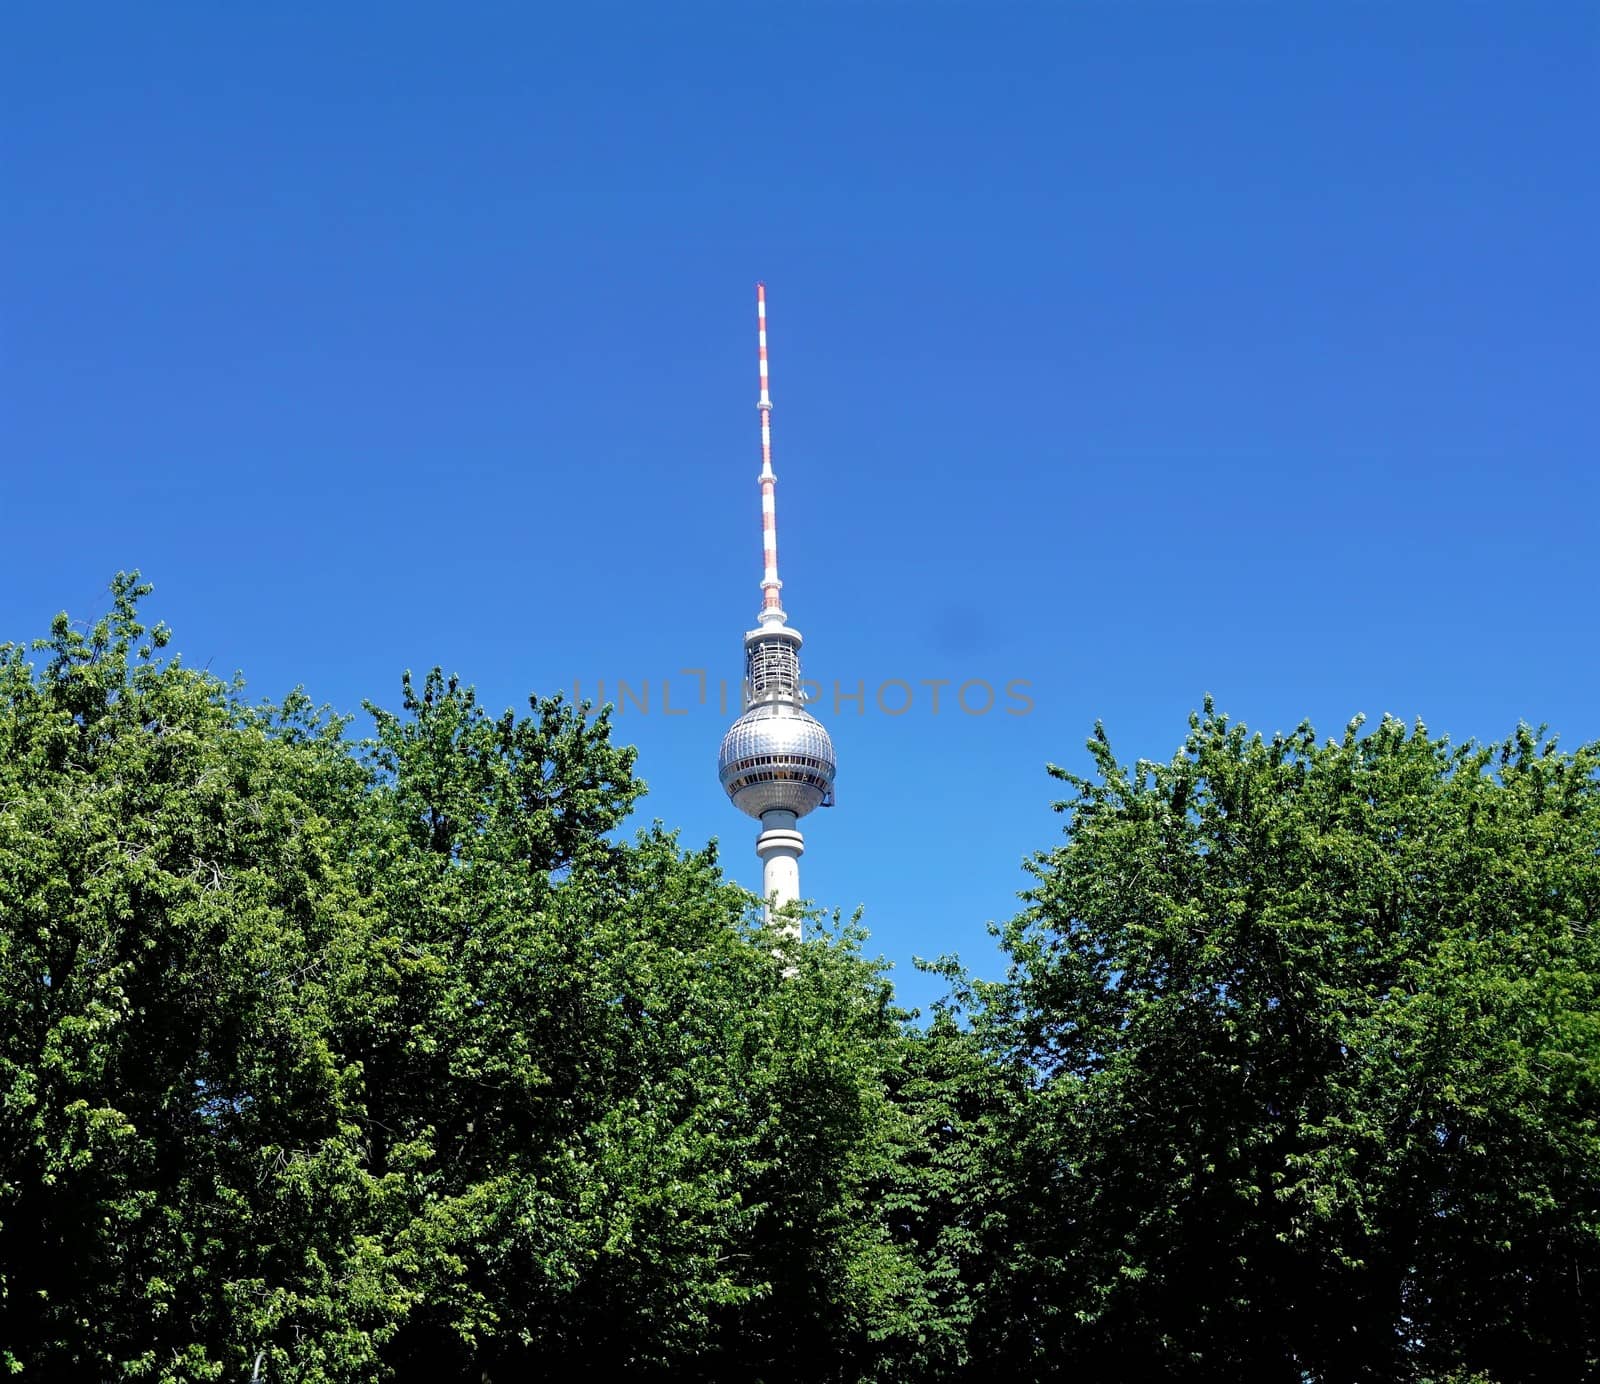 Berlin Fernsehturm in front of blue sky by pisces2386